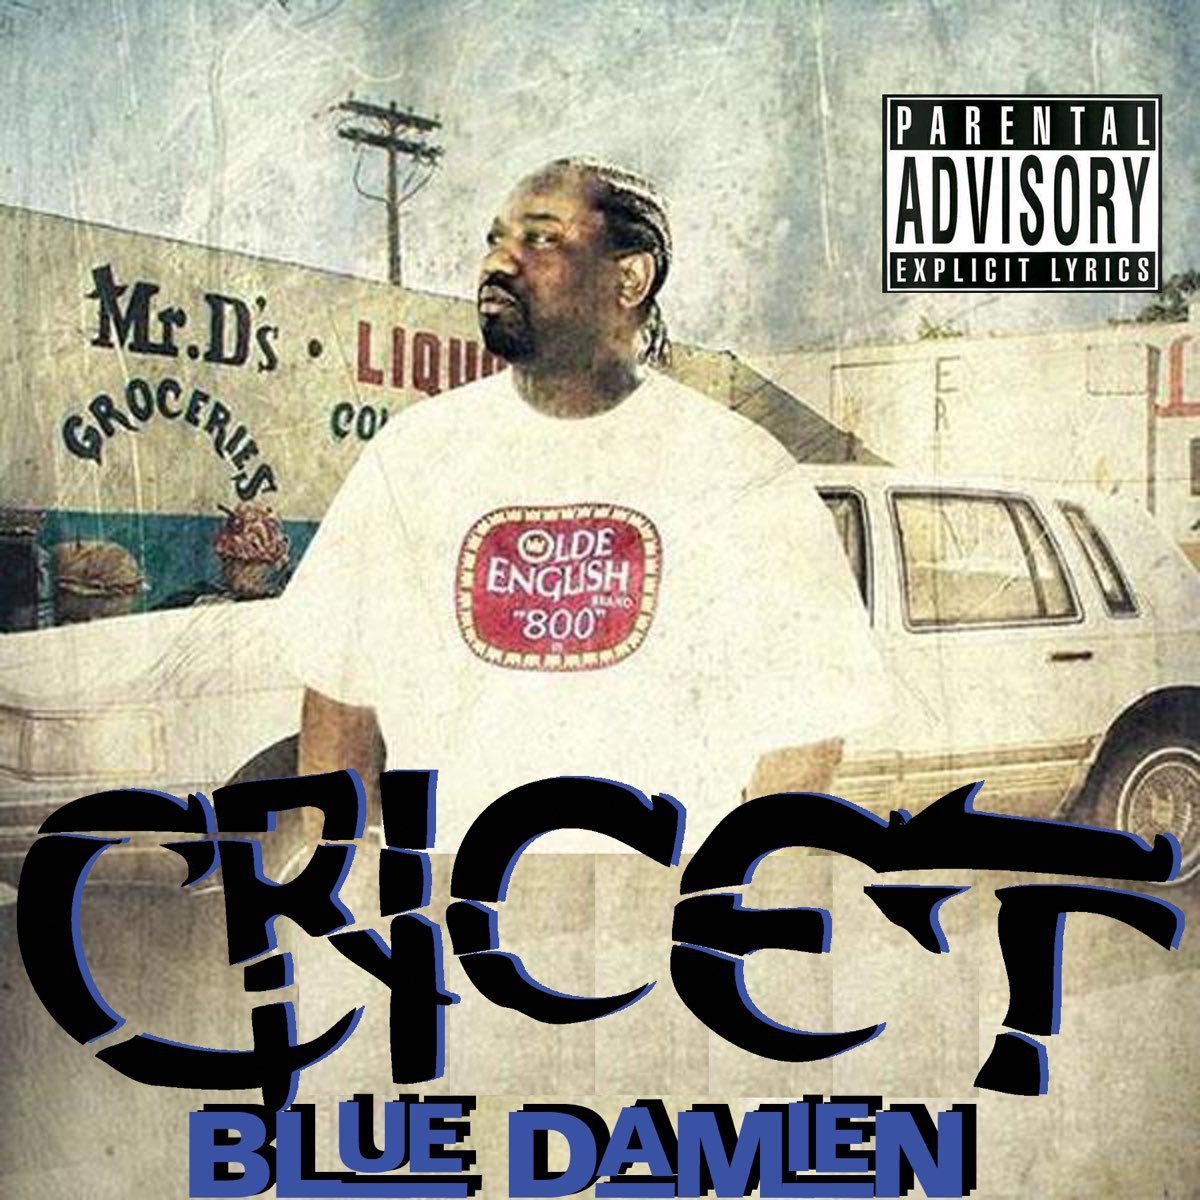 Cricet - Blue Damien